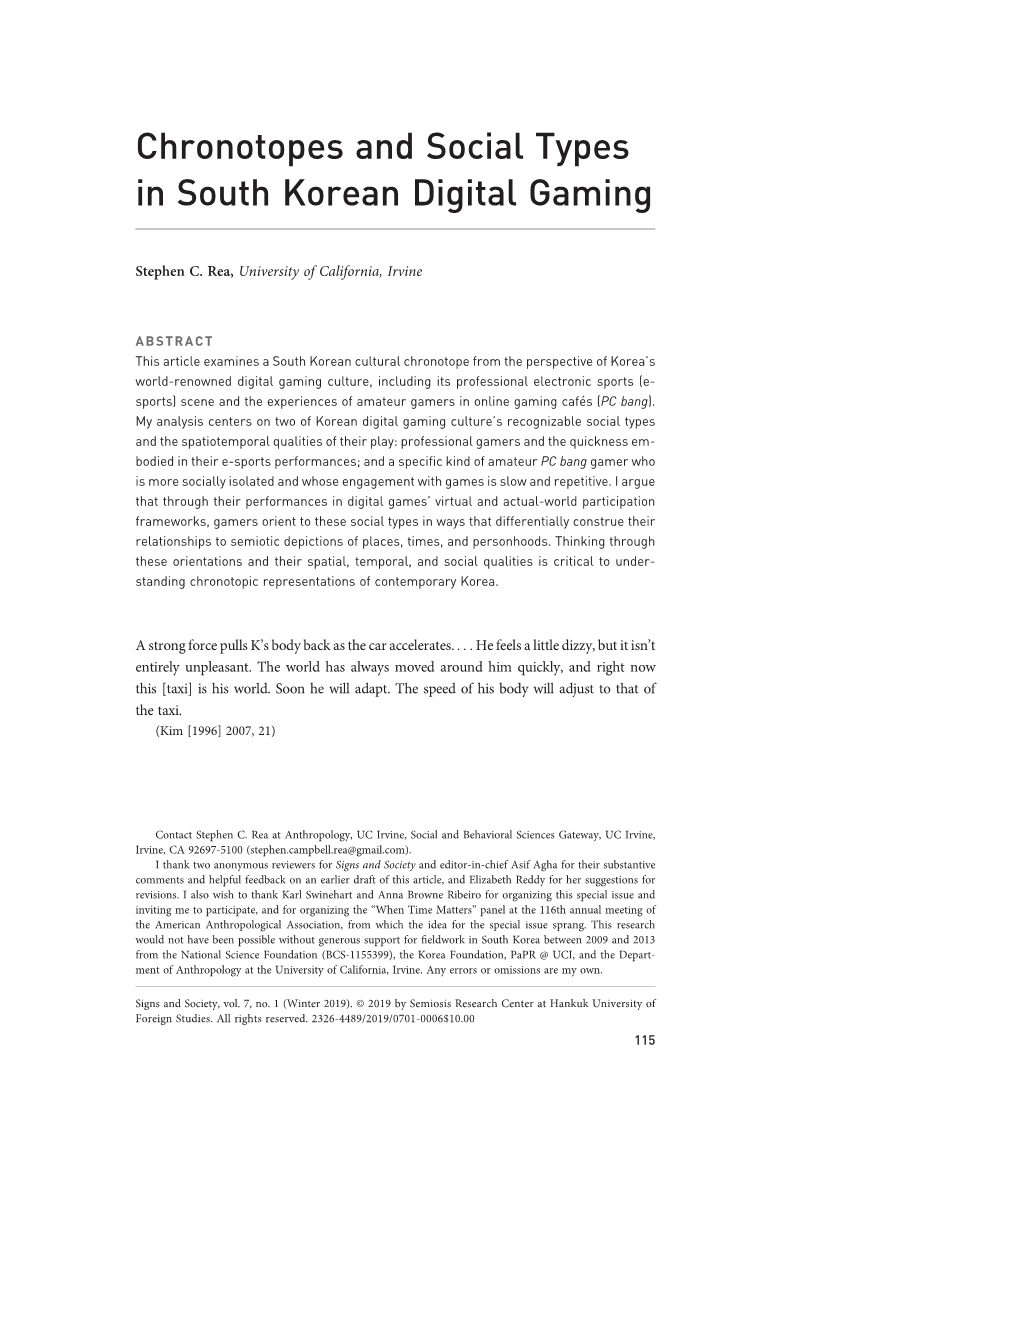 Chronotopes and Social Types in South Korean Digital Gaming